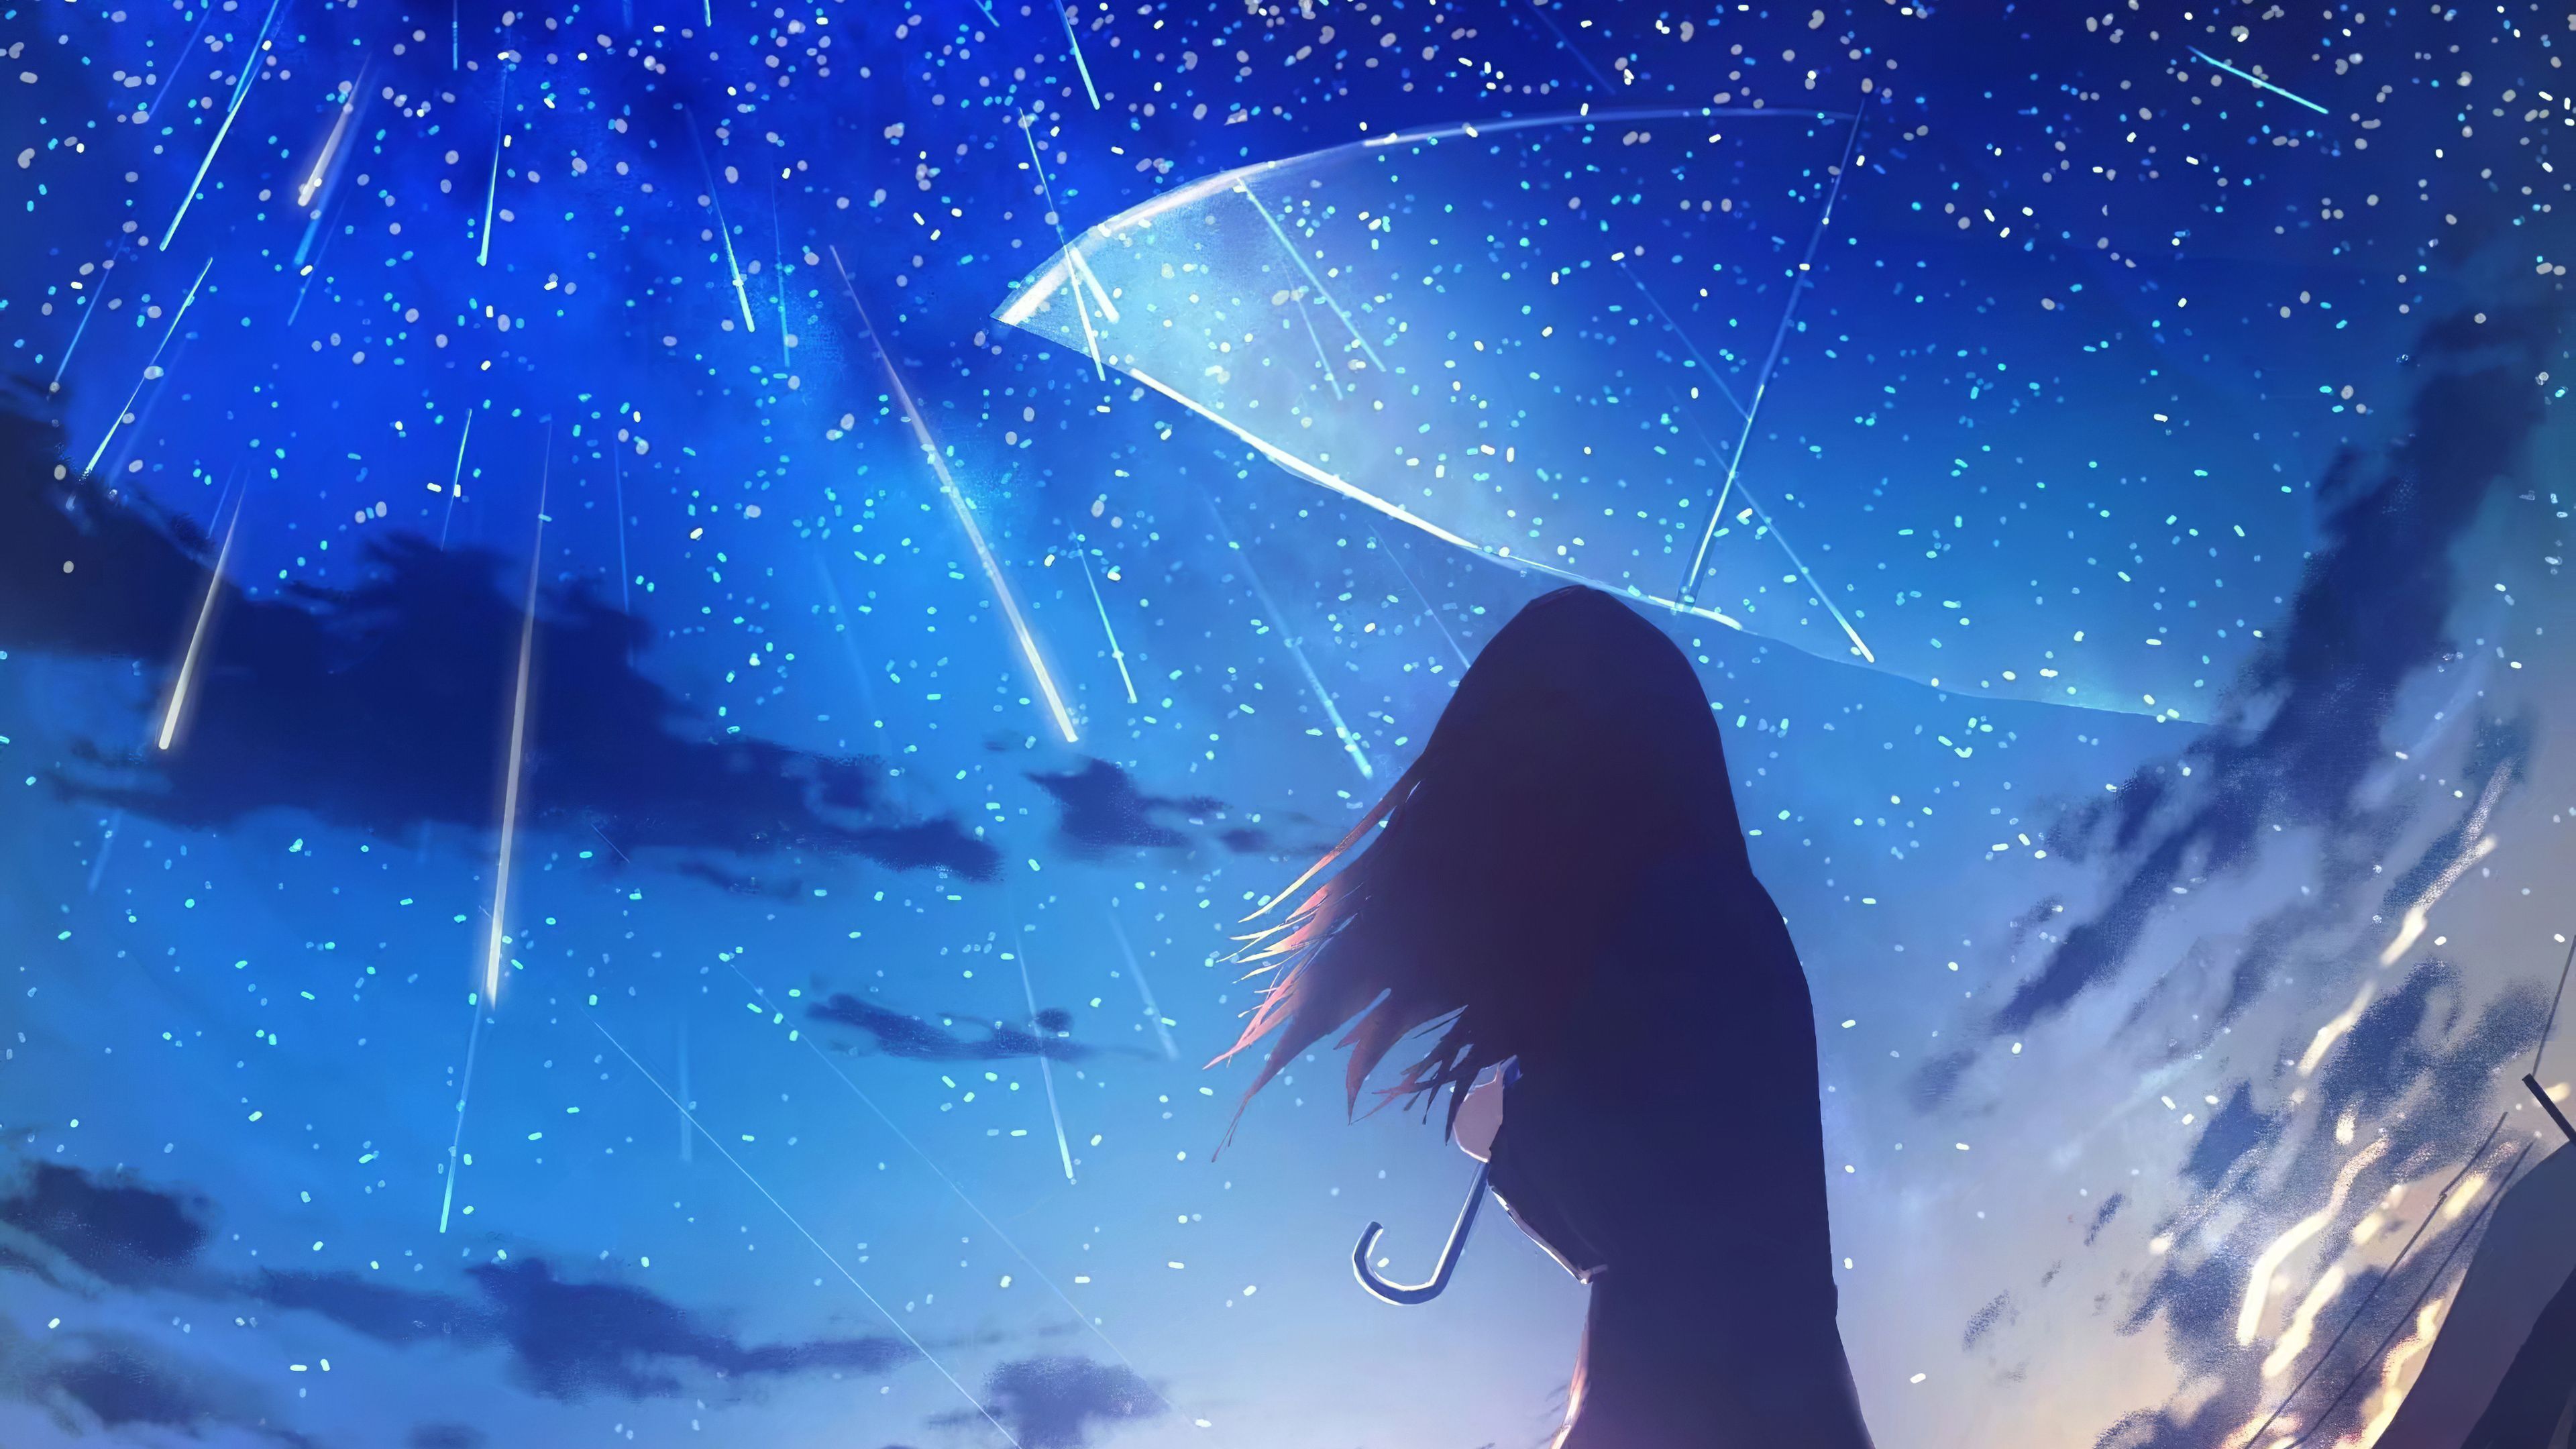 Anime Girl Standing in Rain inside Torii 5K Wallpaper HD Anime 4K  Wallpapers Images and Background  Wallpapers Den